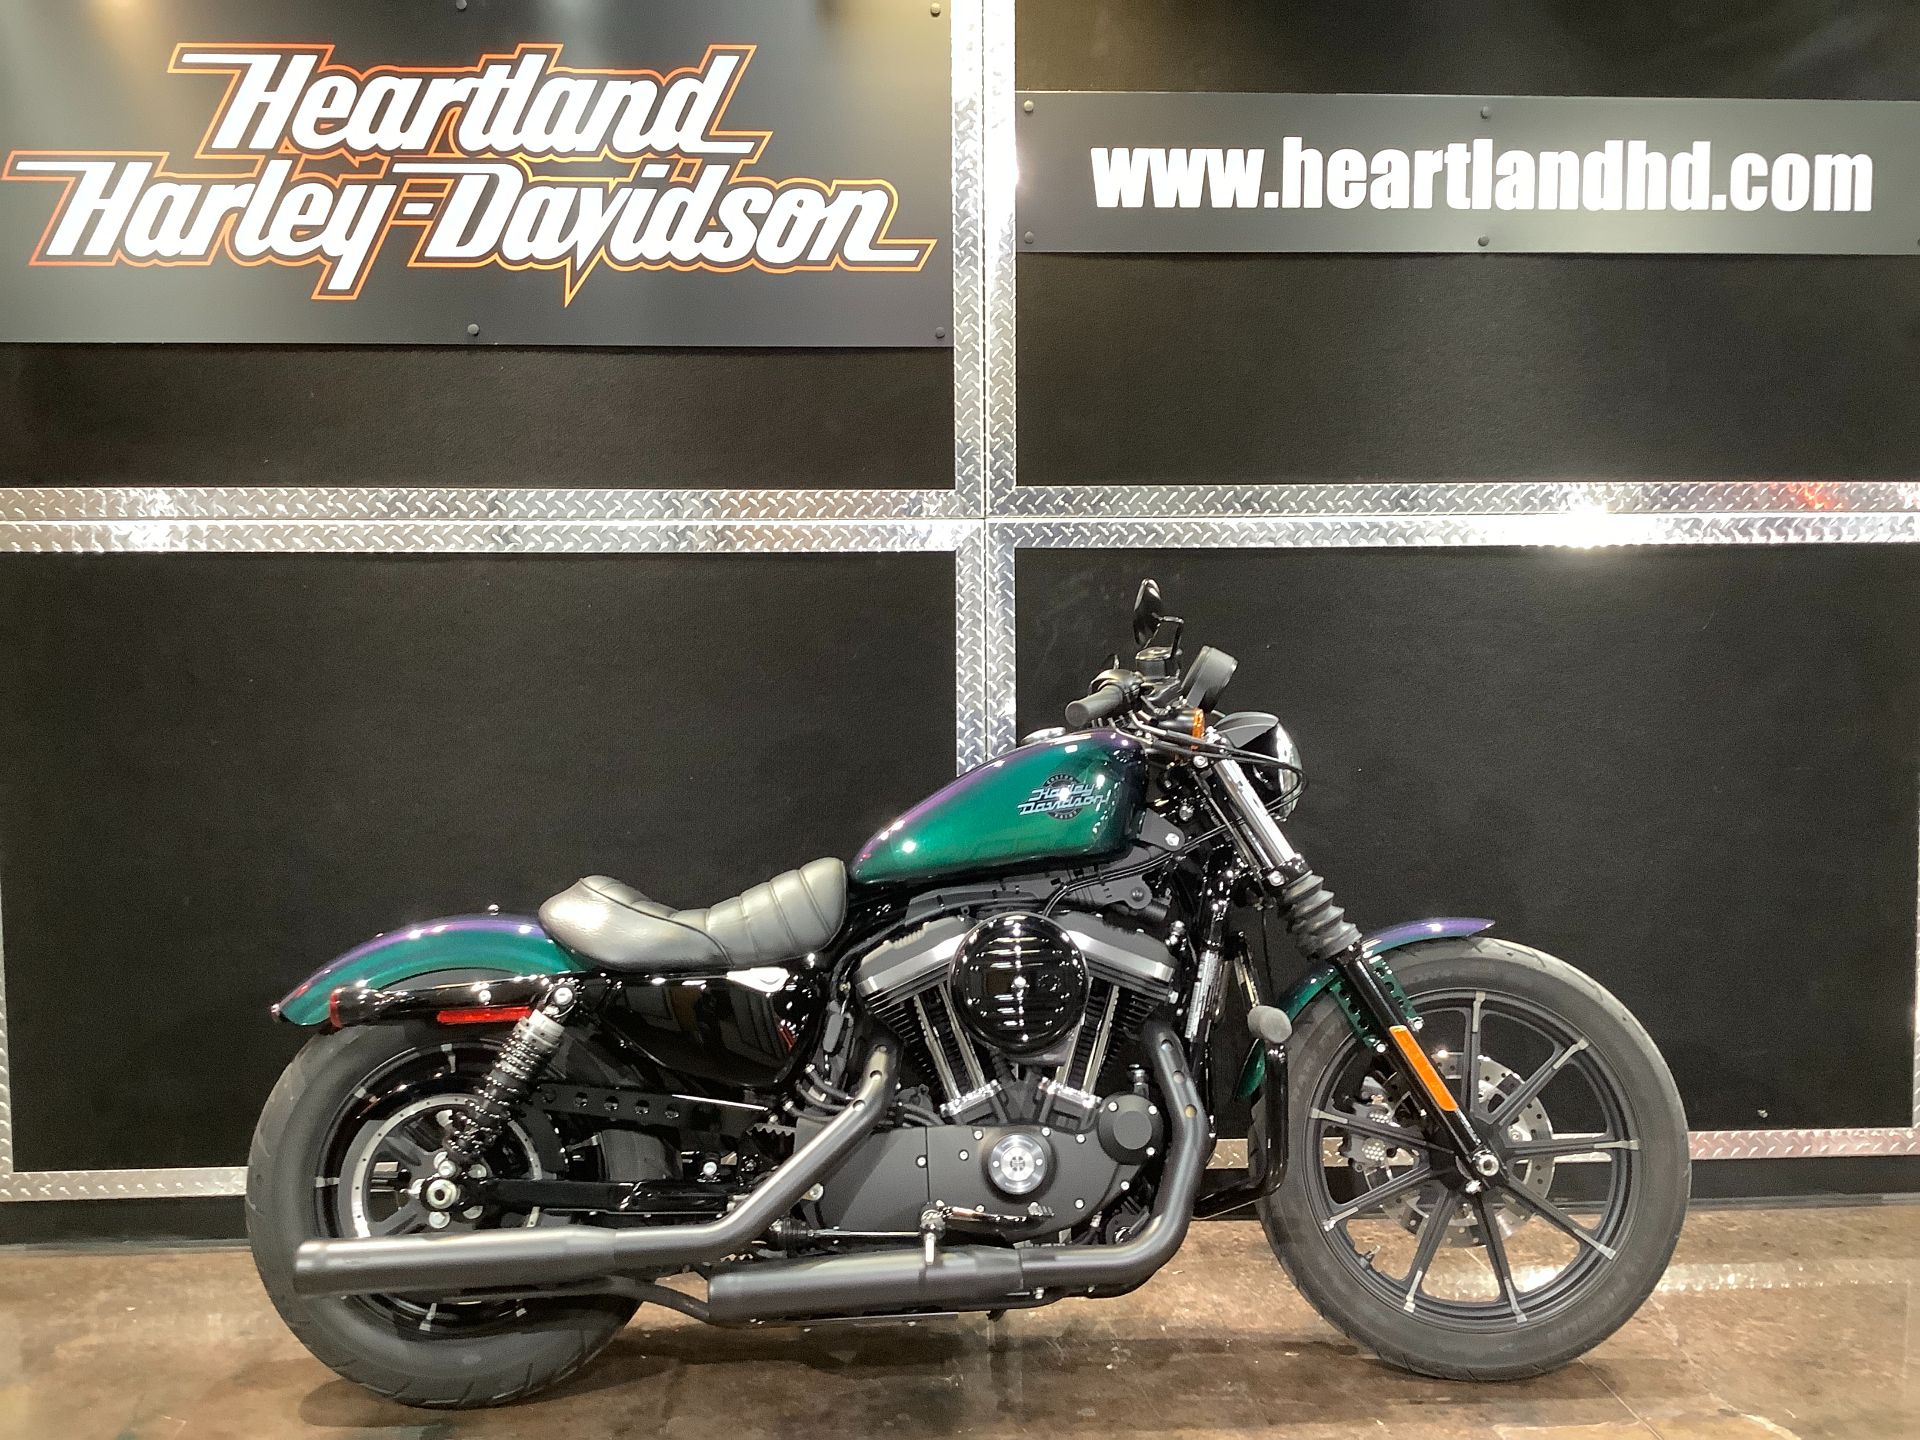 2021 Harley-Davidson Iron 883™ in Burlington, Iowa - Photo 1